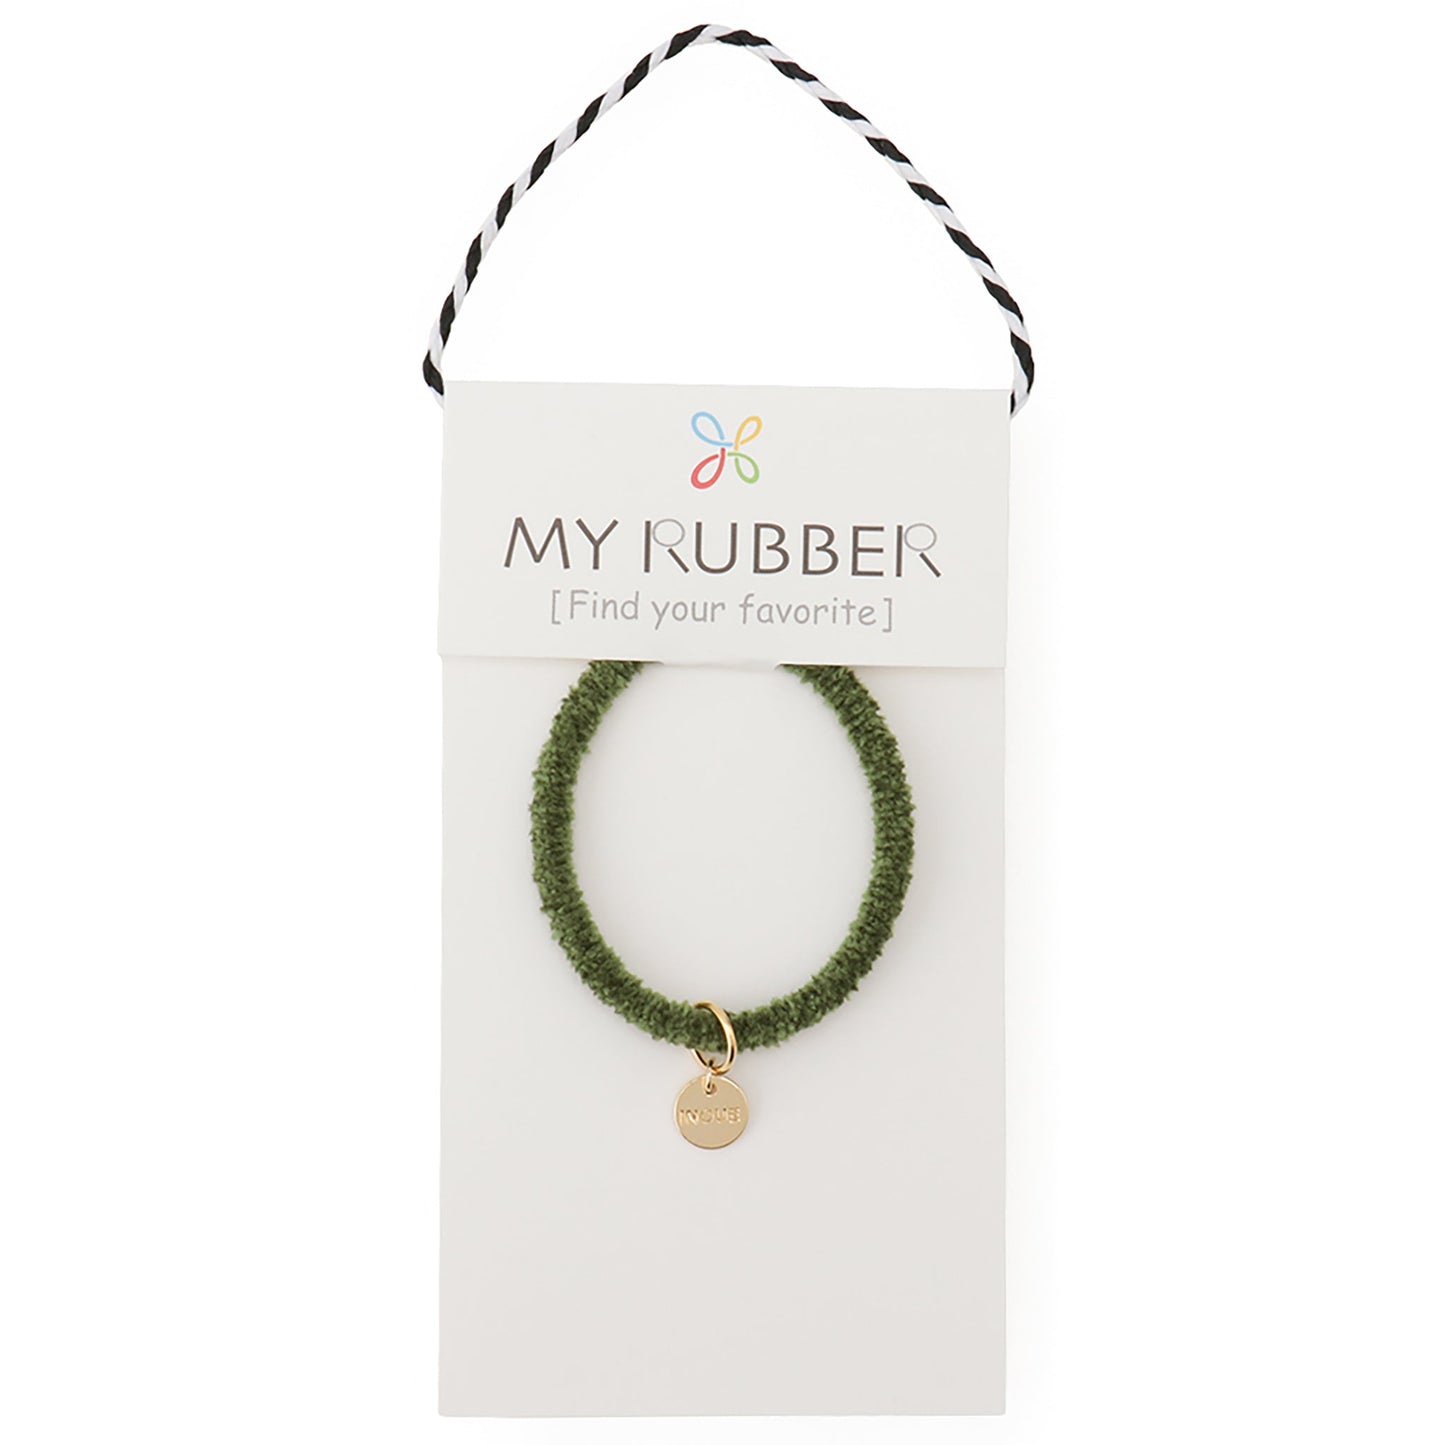 [MyRubber] モコリングS カーキグリーン / ヘアアクセサリー ヘアゴム 髪が細い 小さめ ヘアアレンジ カジュアル ミニサイズ